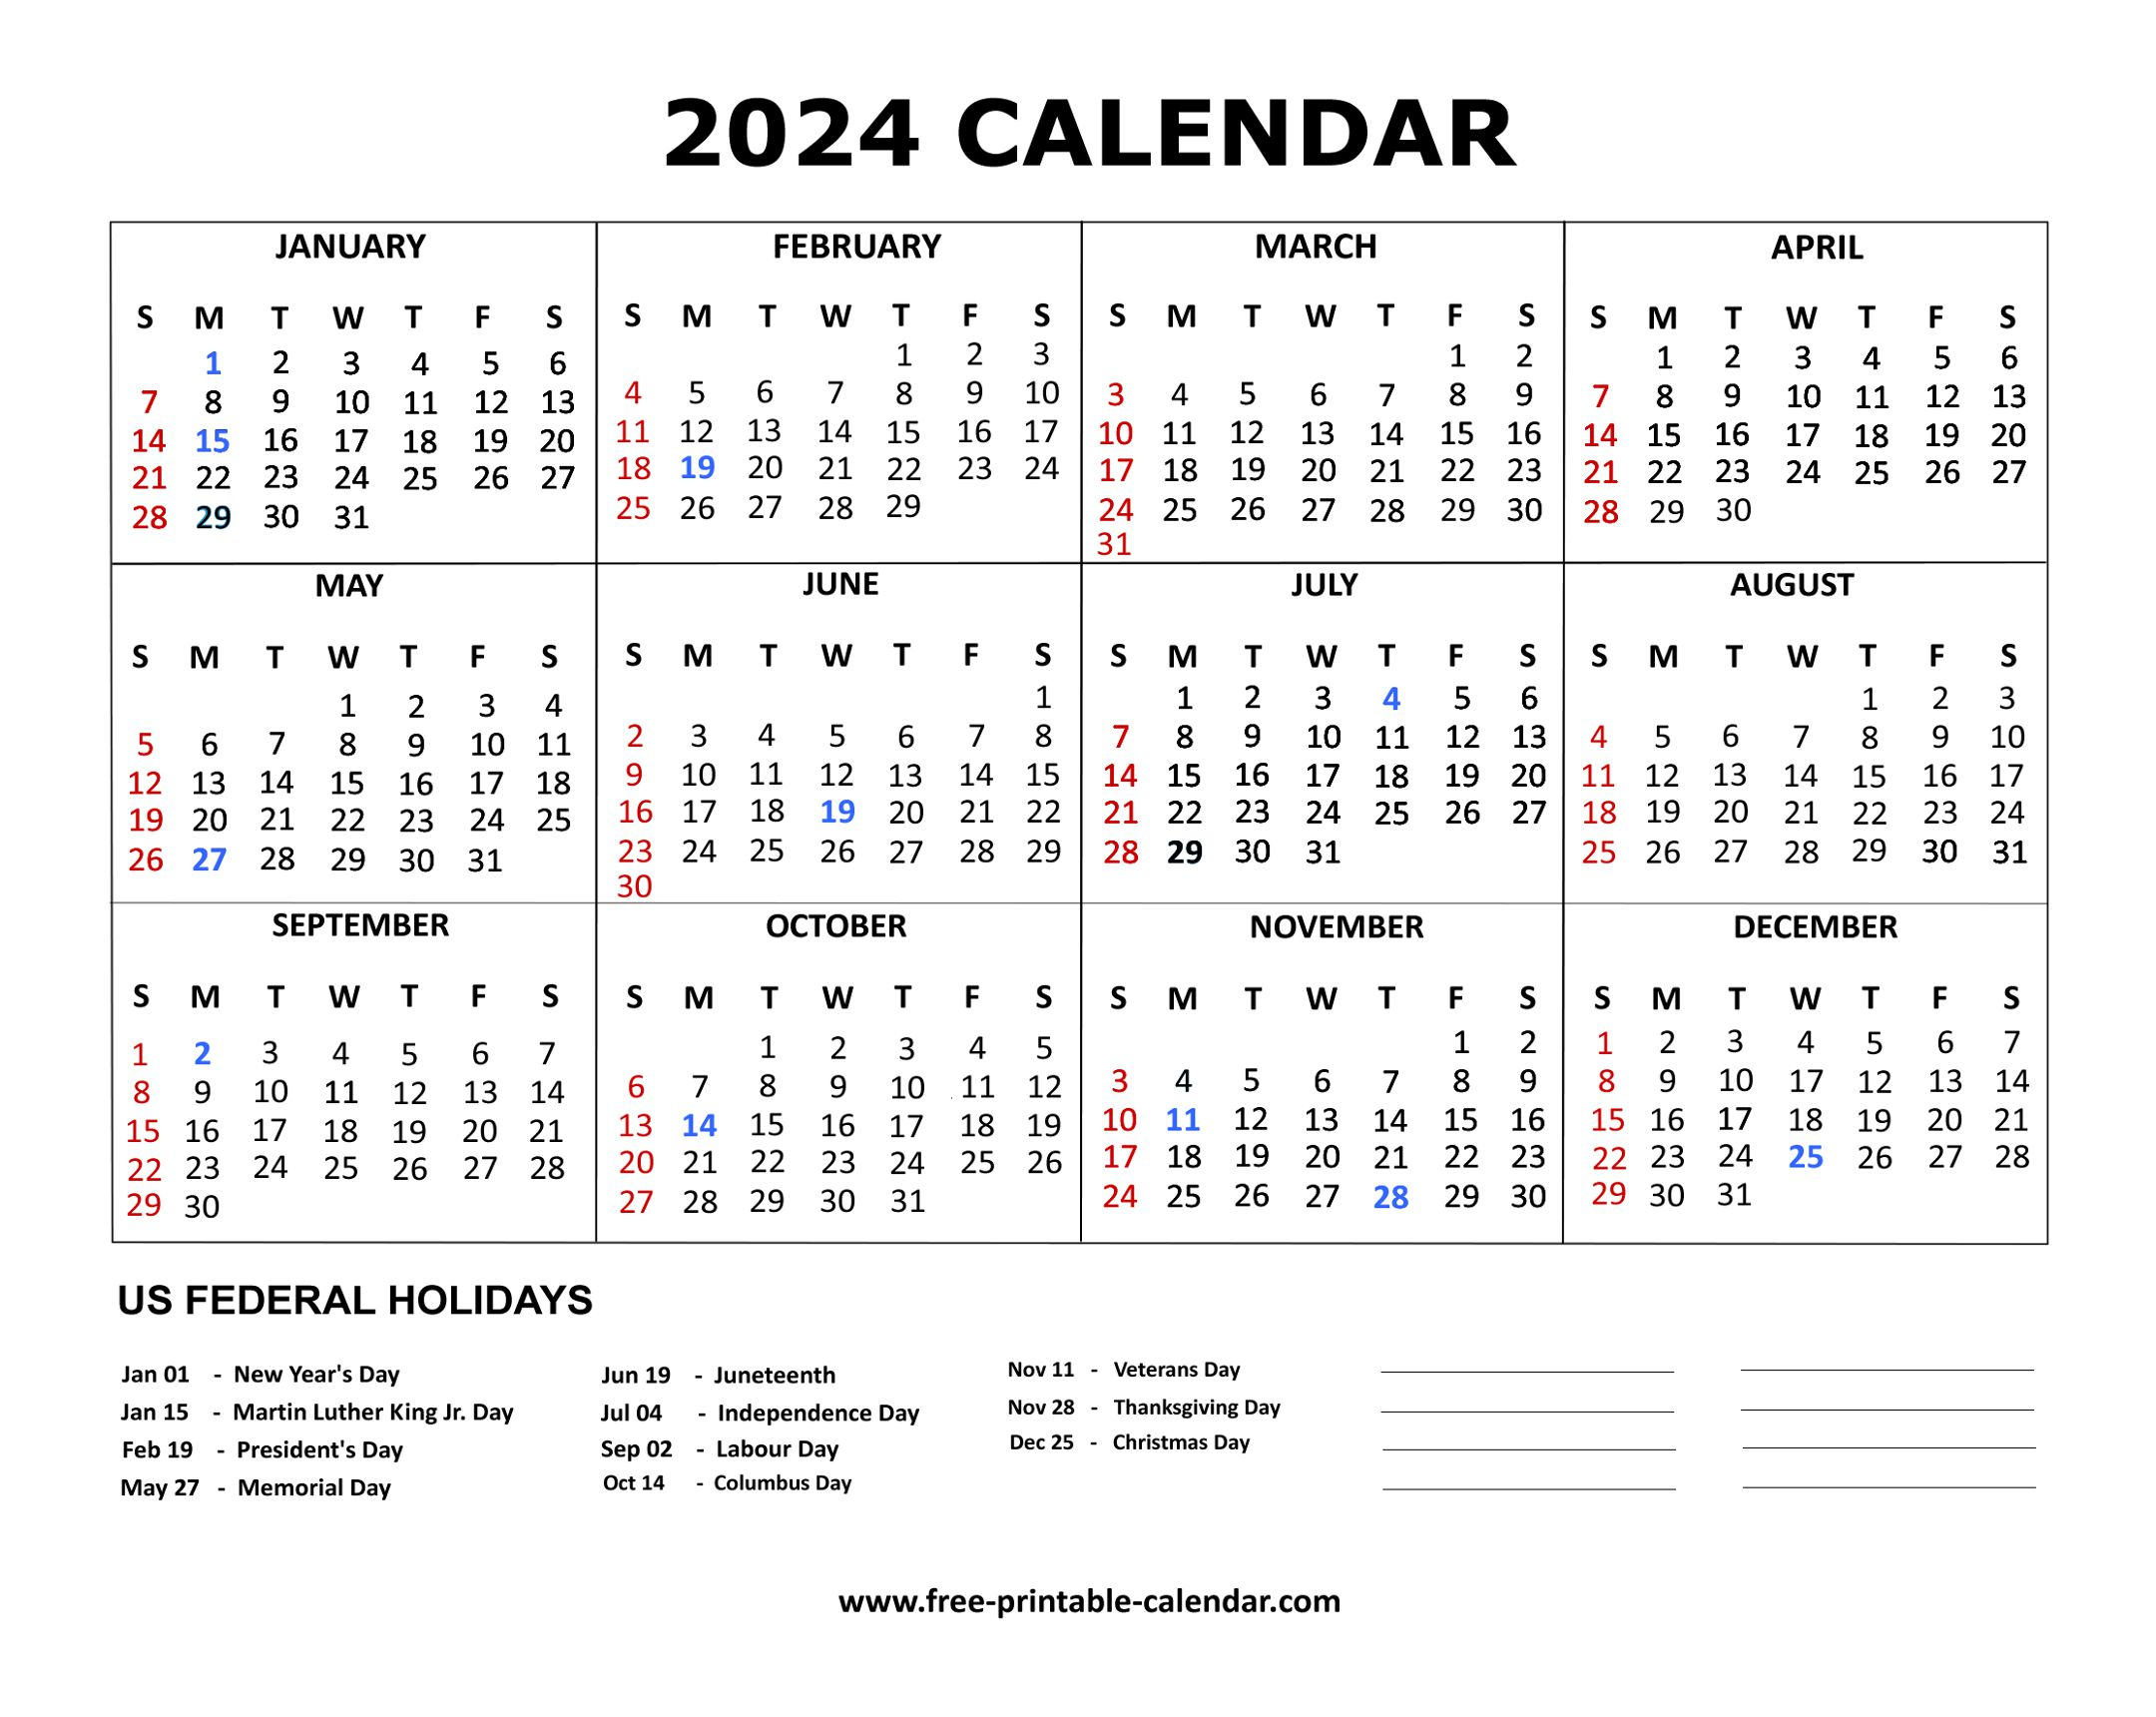 2024 Calendar | Free Printable 2024 Calendar With Holidays Us